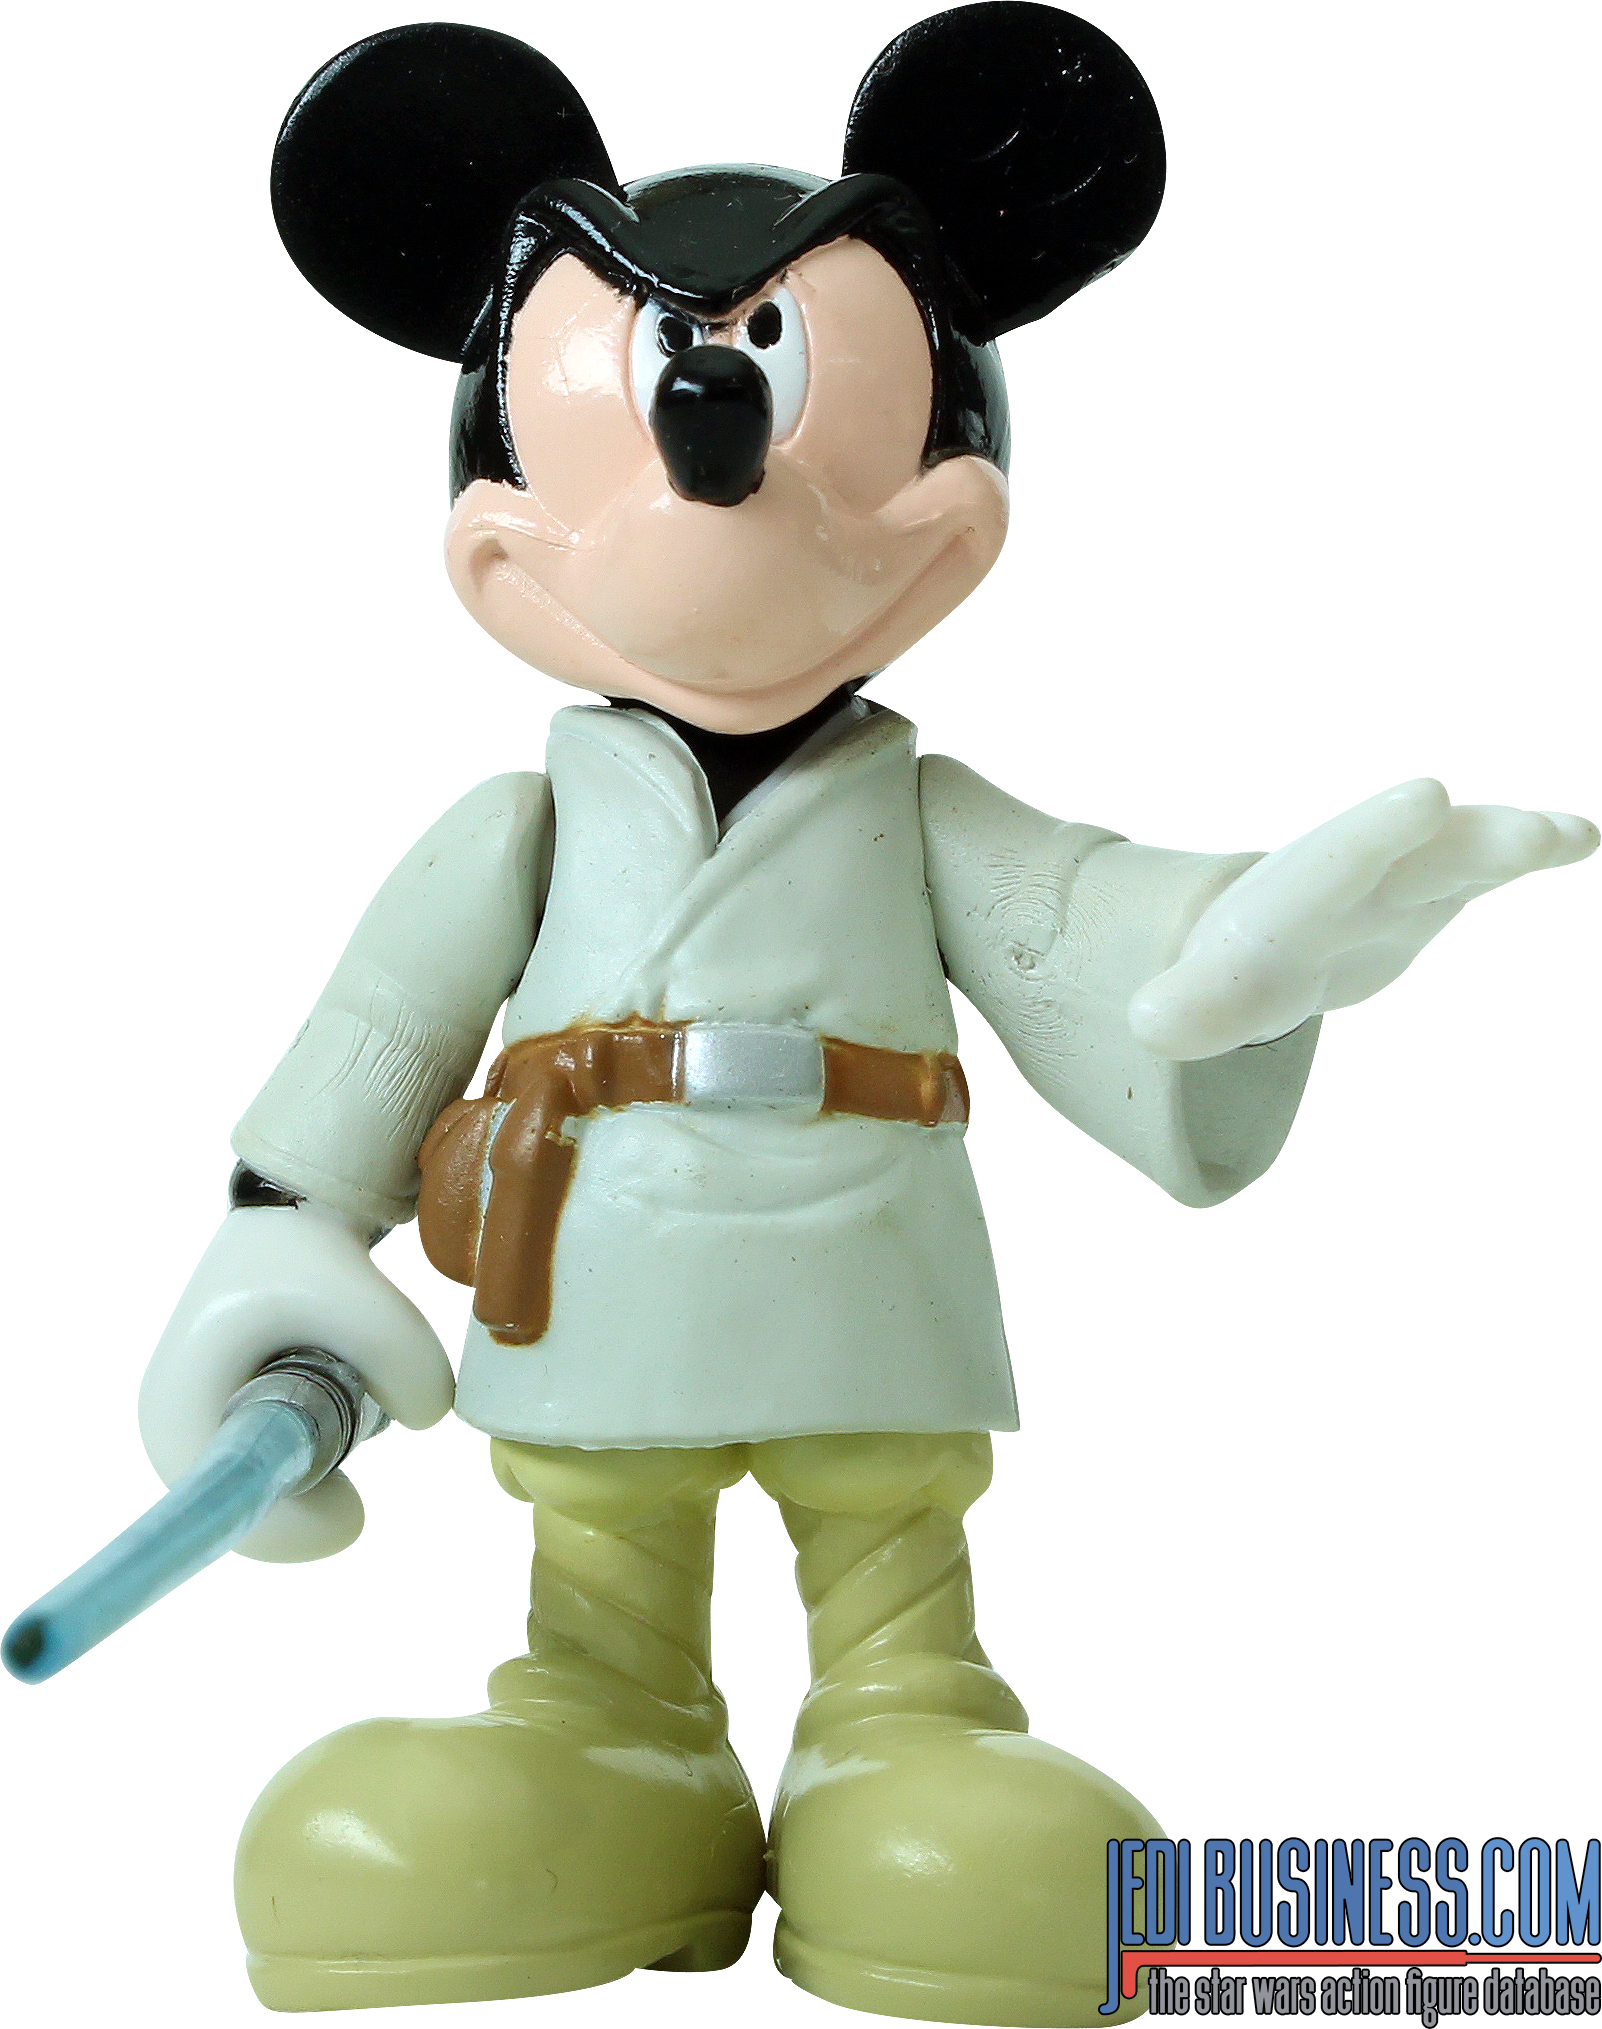 Mickey Mouse Series 1 - Mickey Mouse As Luke Skywalker